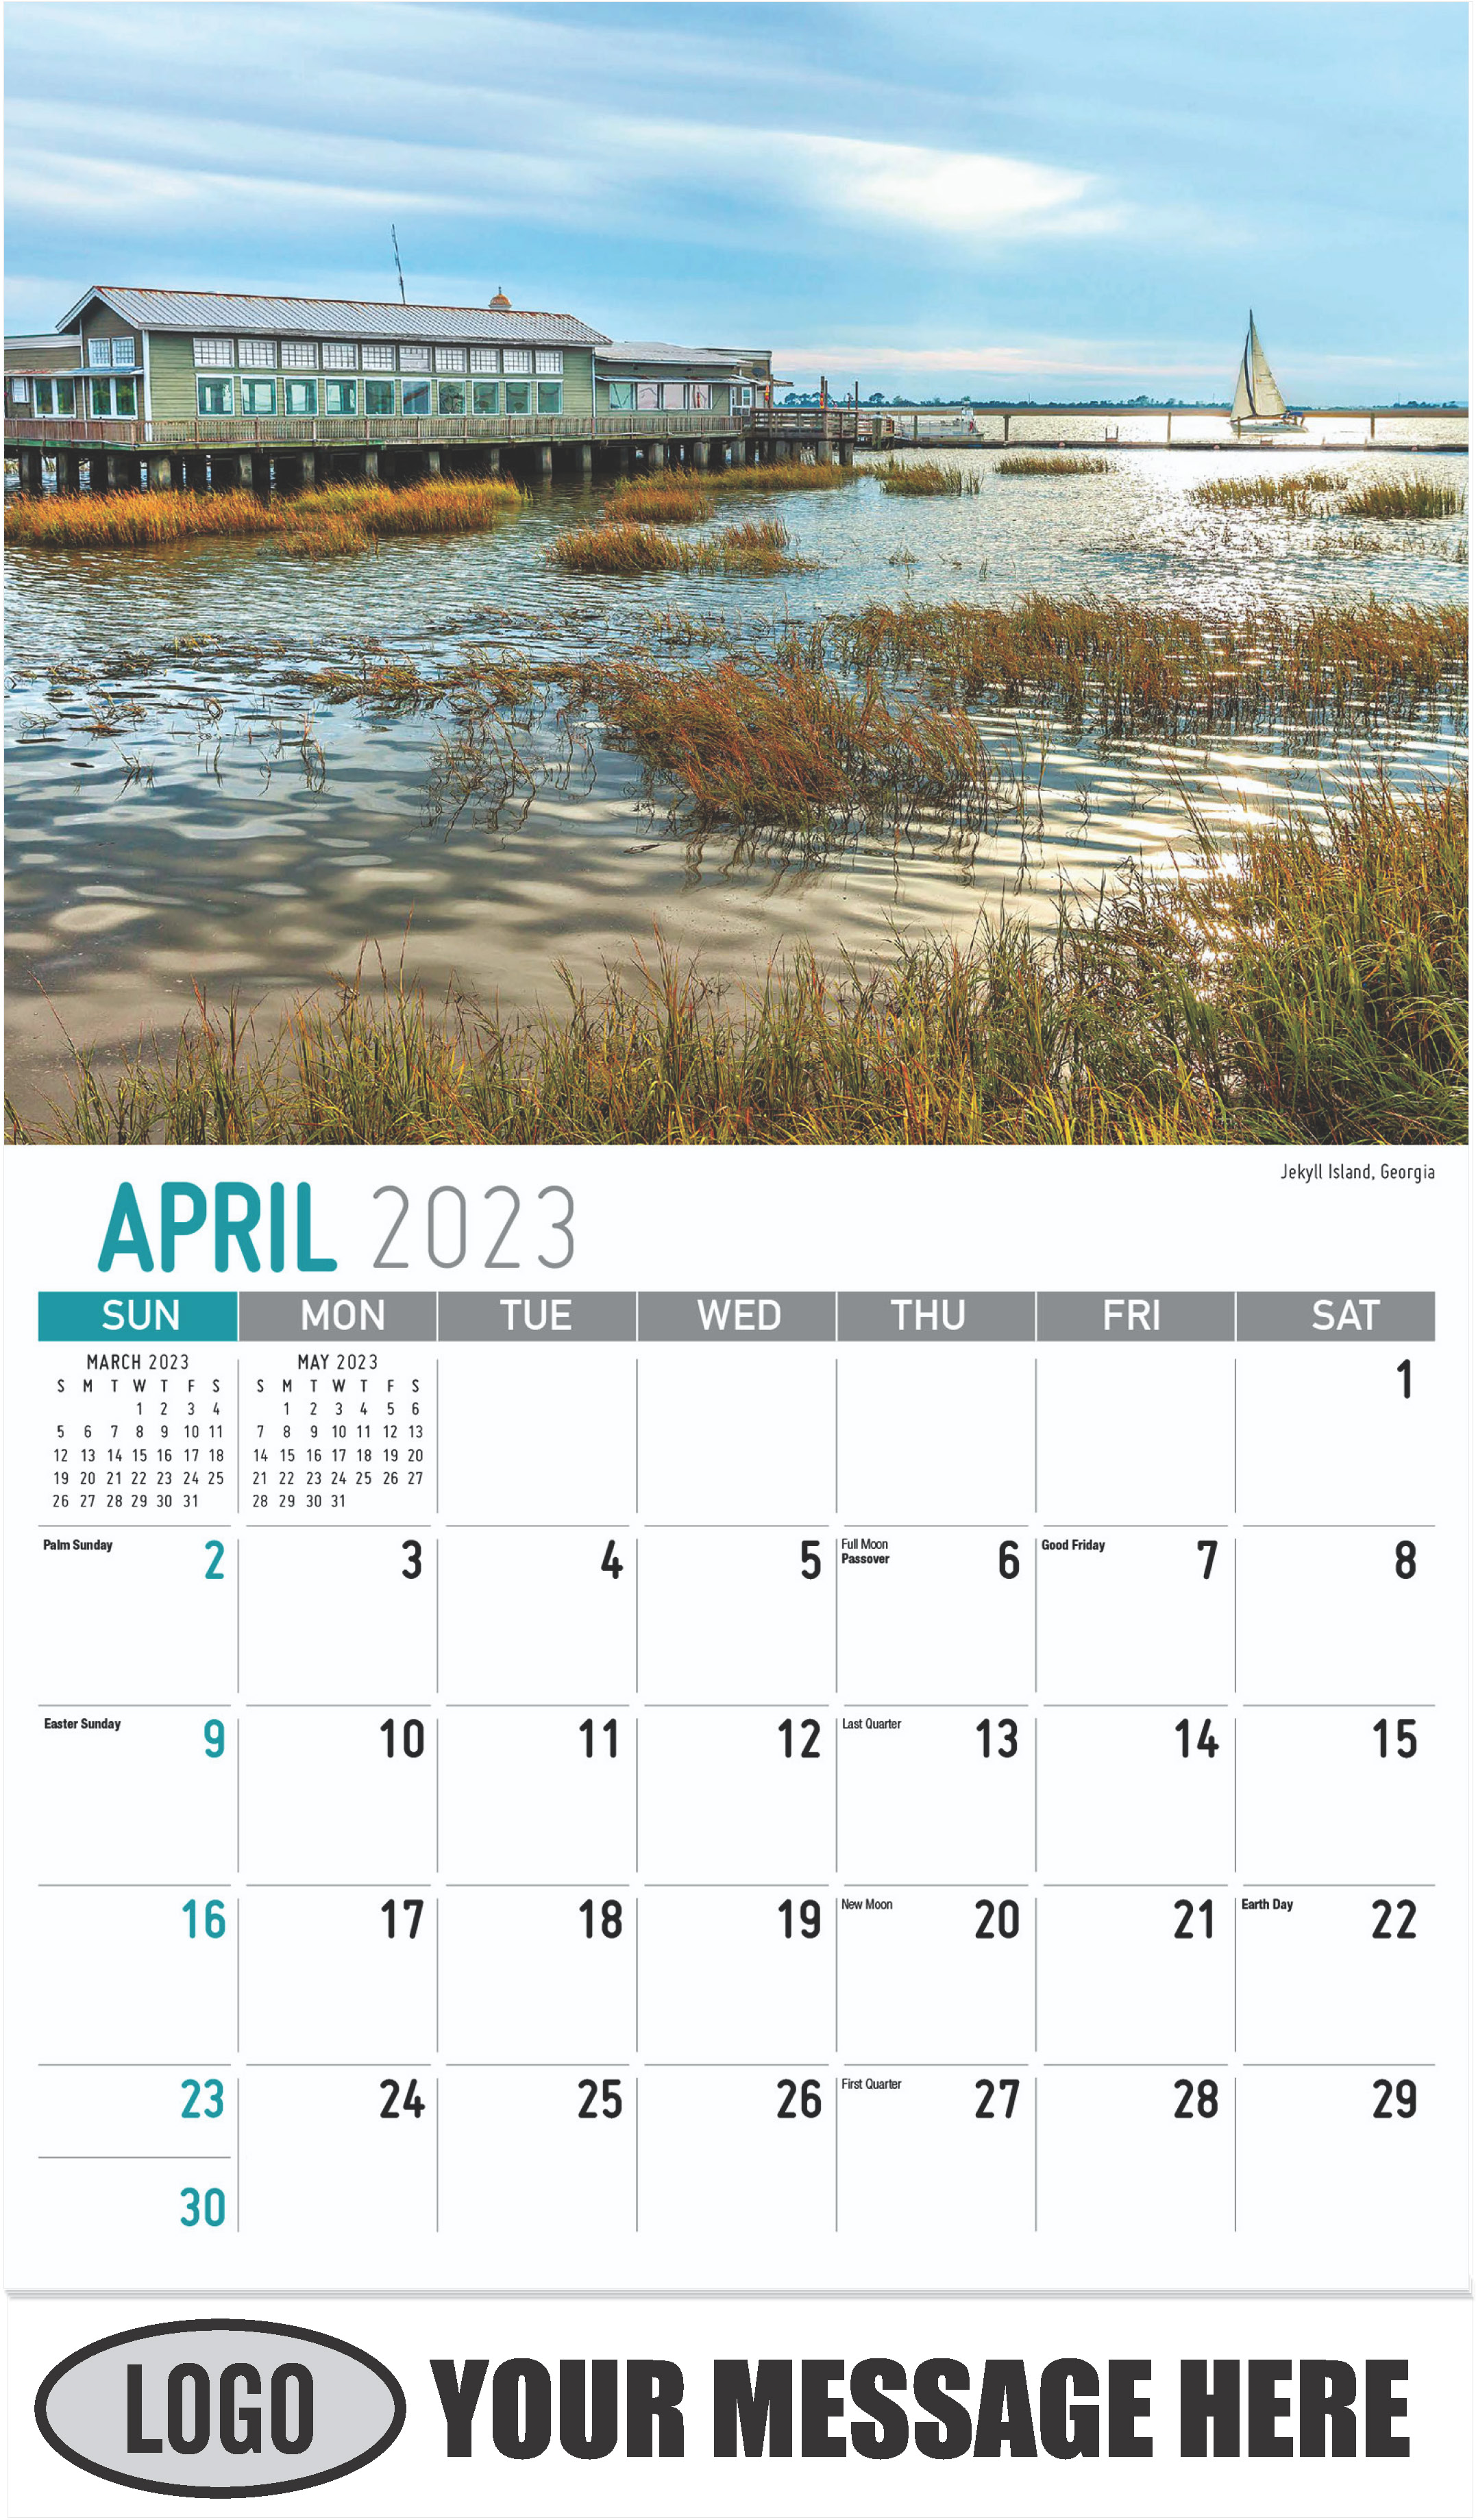 Jekyll Island, Georgia - April - Scenes of Southeast USA 2023 Promotional Calendar